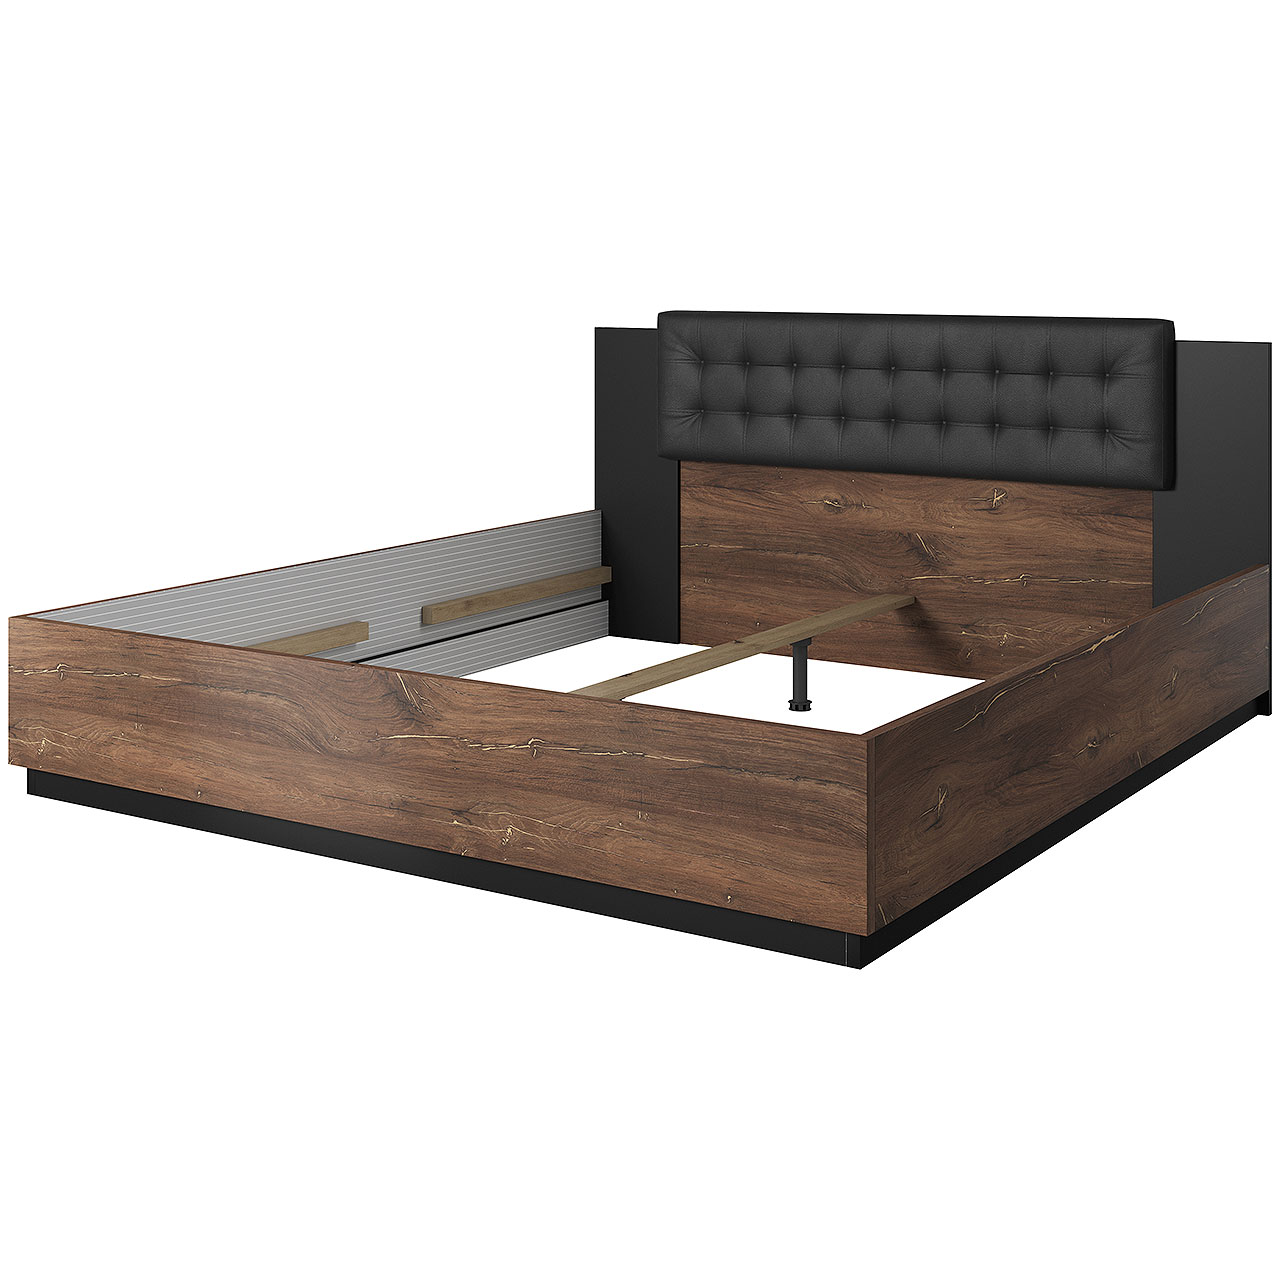 Bed 140x200 SIGMA SG30 oak flagstaf copper / black